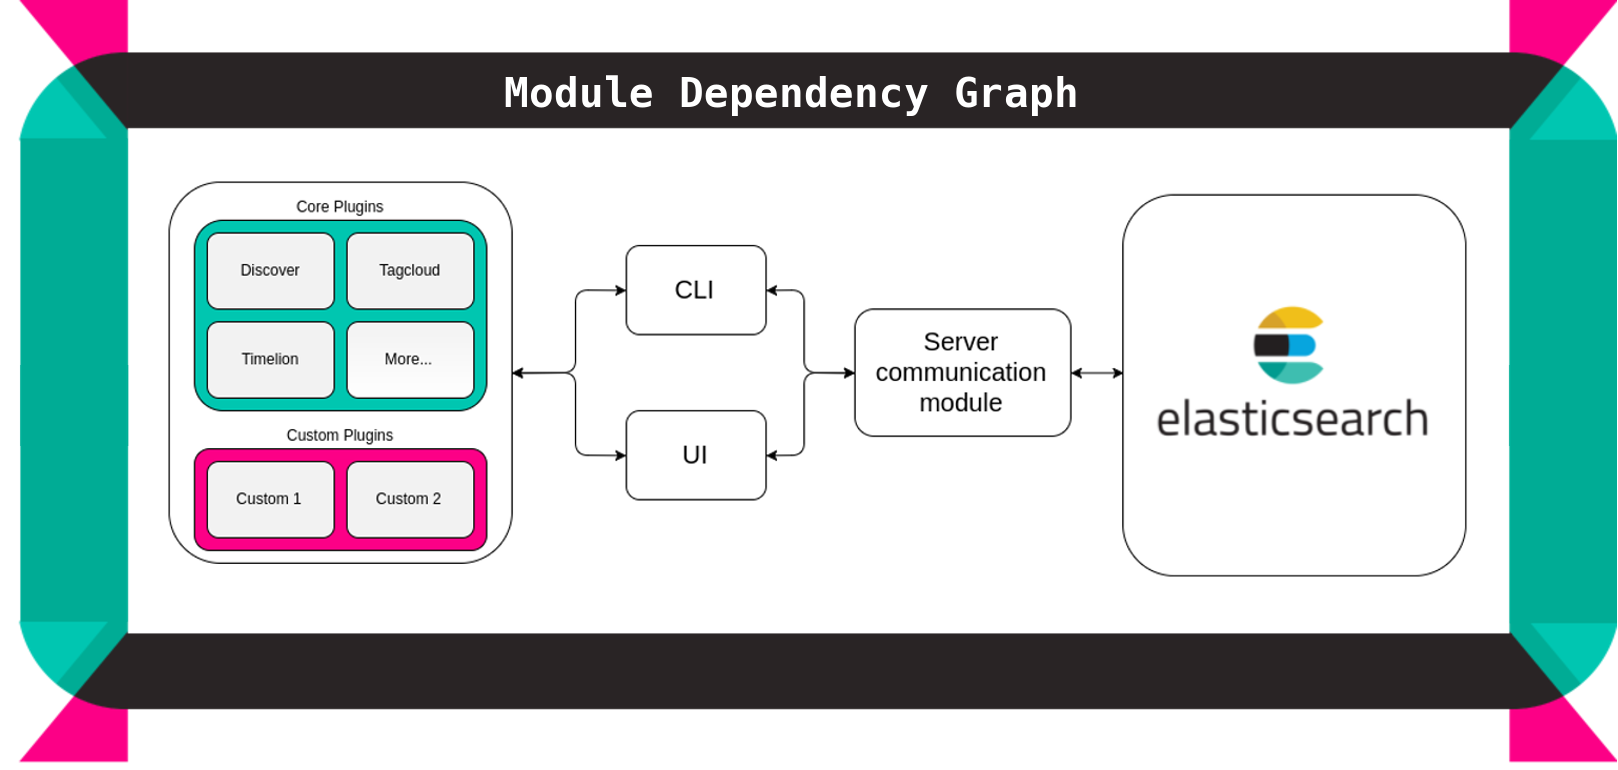 High-level module dependency diagram